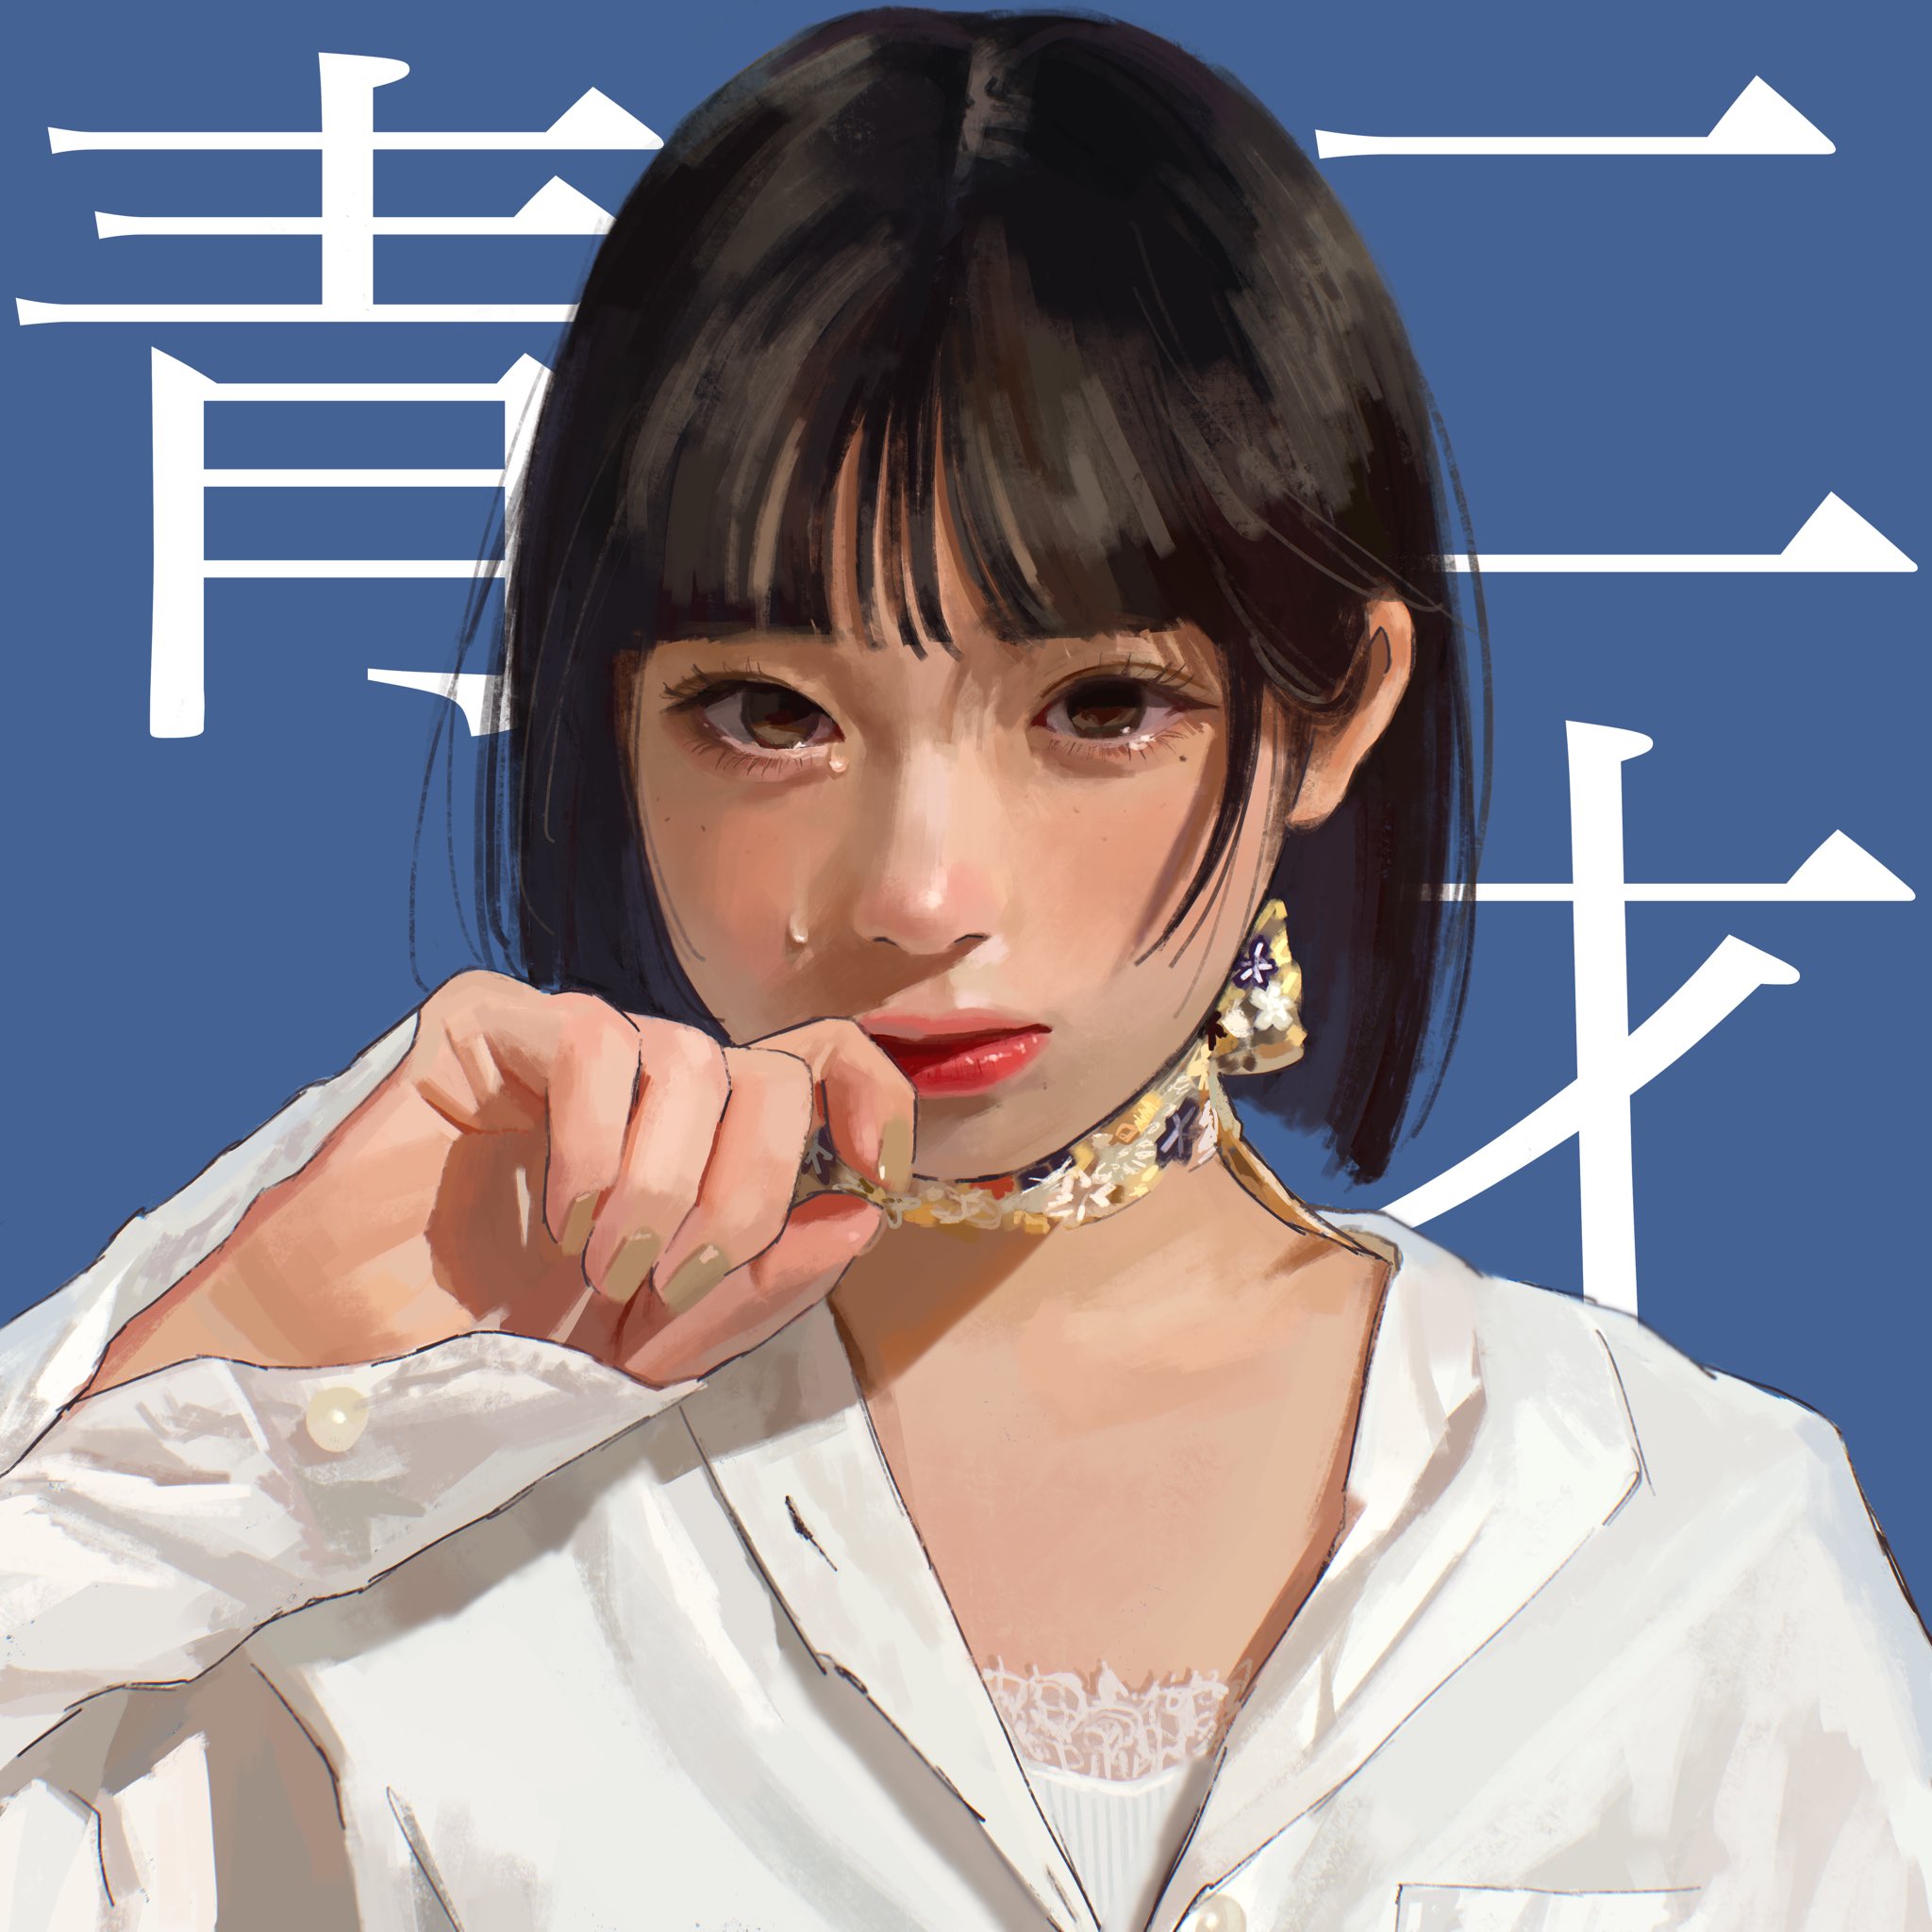 Wanuka — Yoseatsume cover artwork